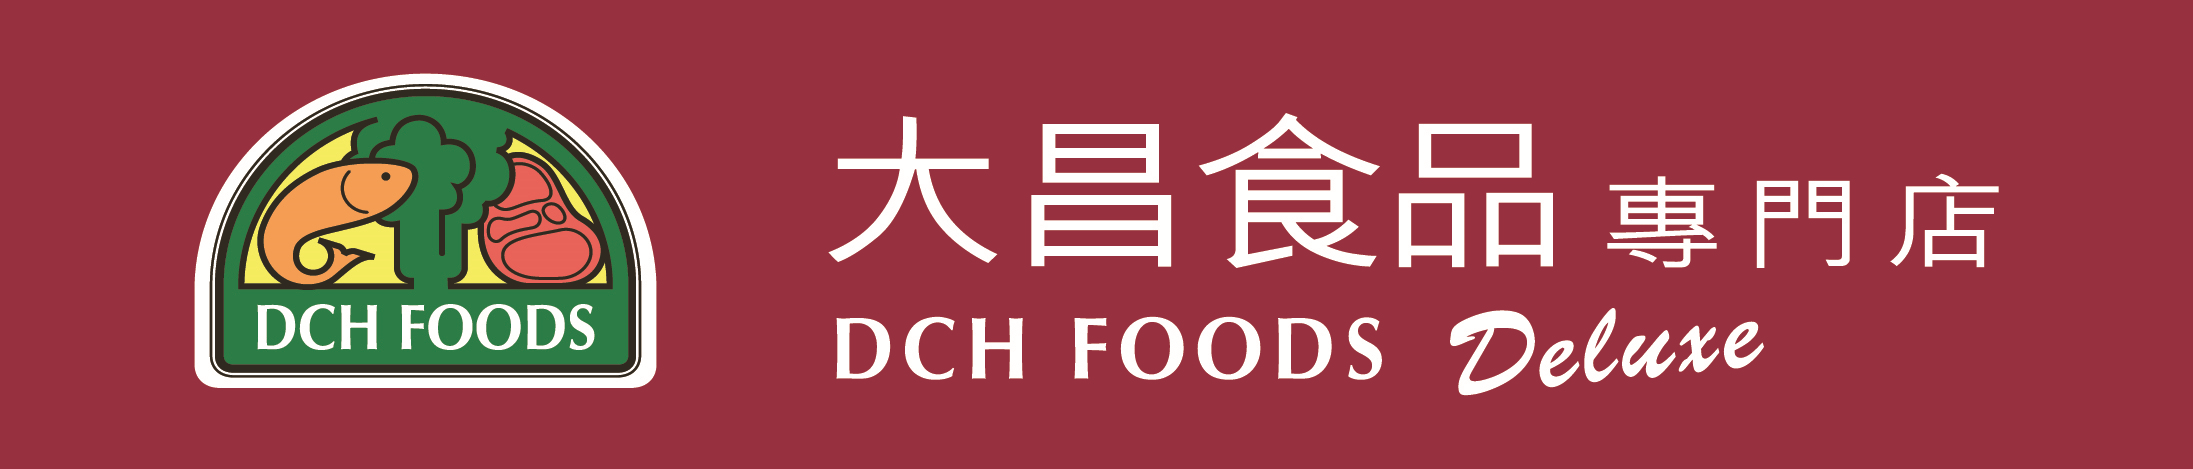 food scheme 2020 gold DCH FoodMart